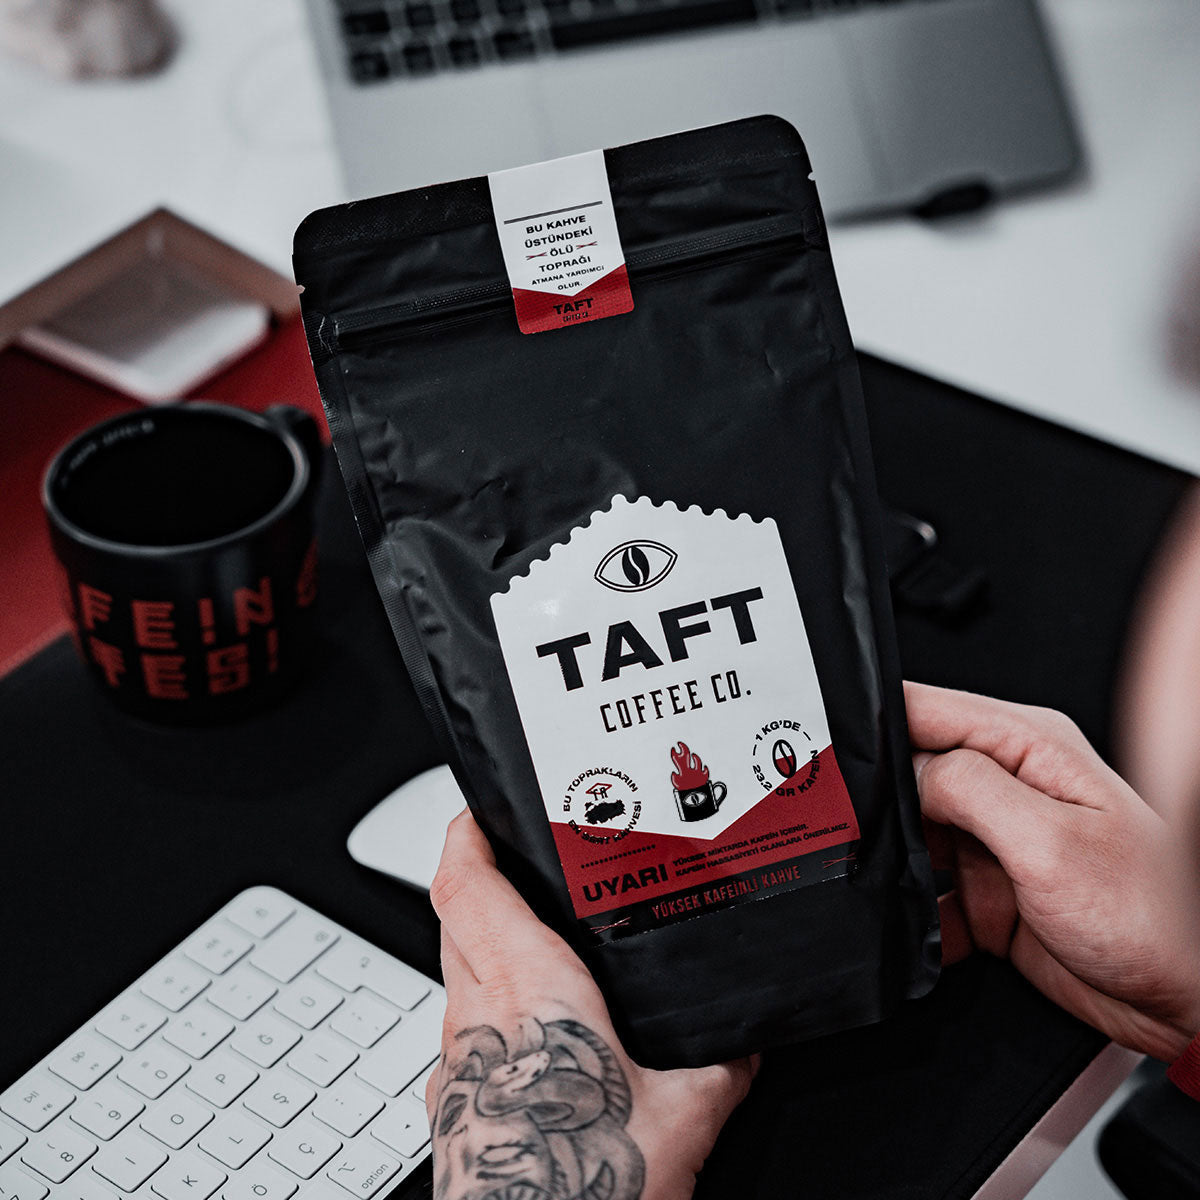 TAFT Coffee Yüksek Kafeinli Filtre Kahve